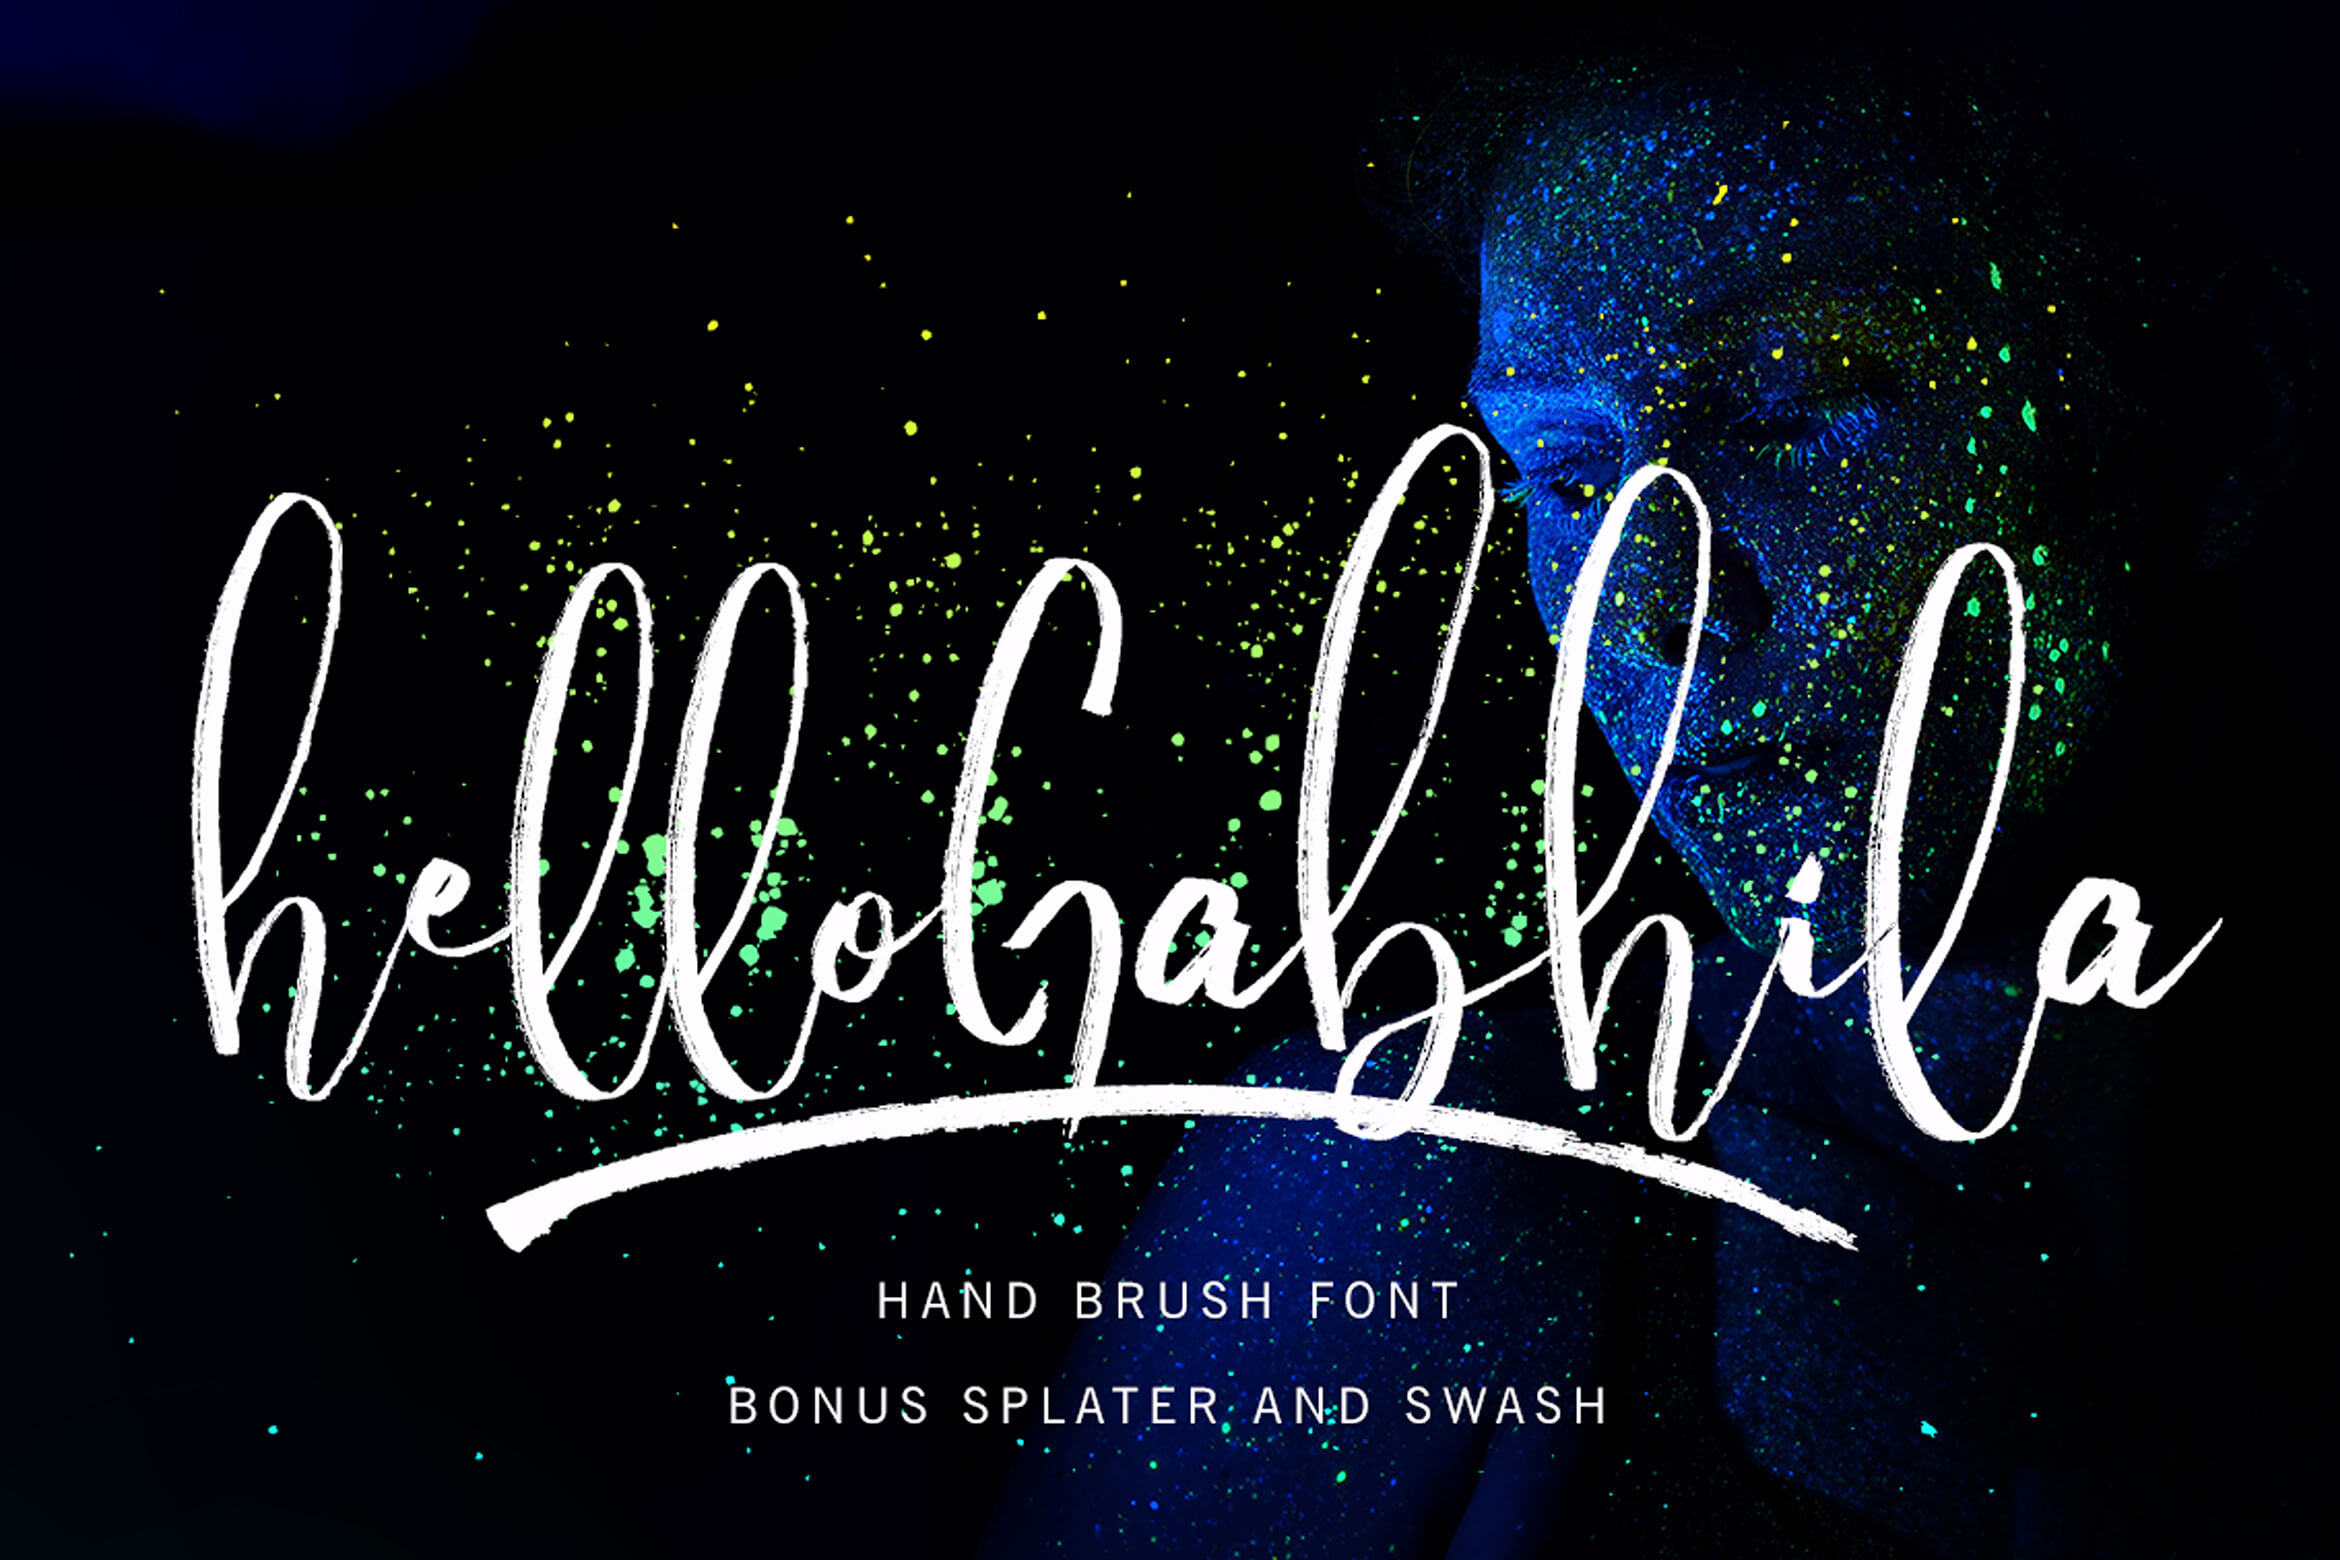 hello gabhila stylish brush handwritten font pinterest image.